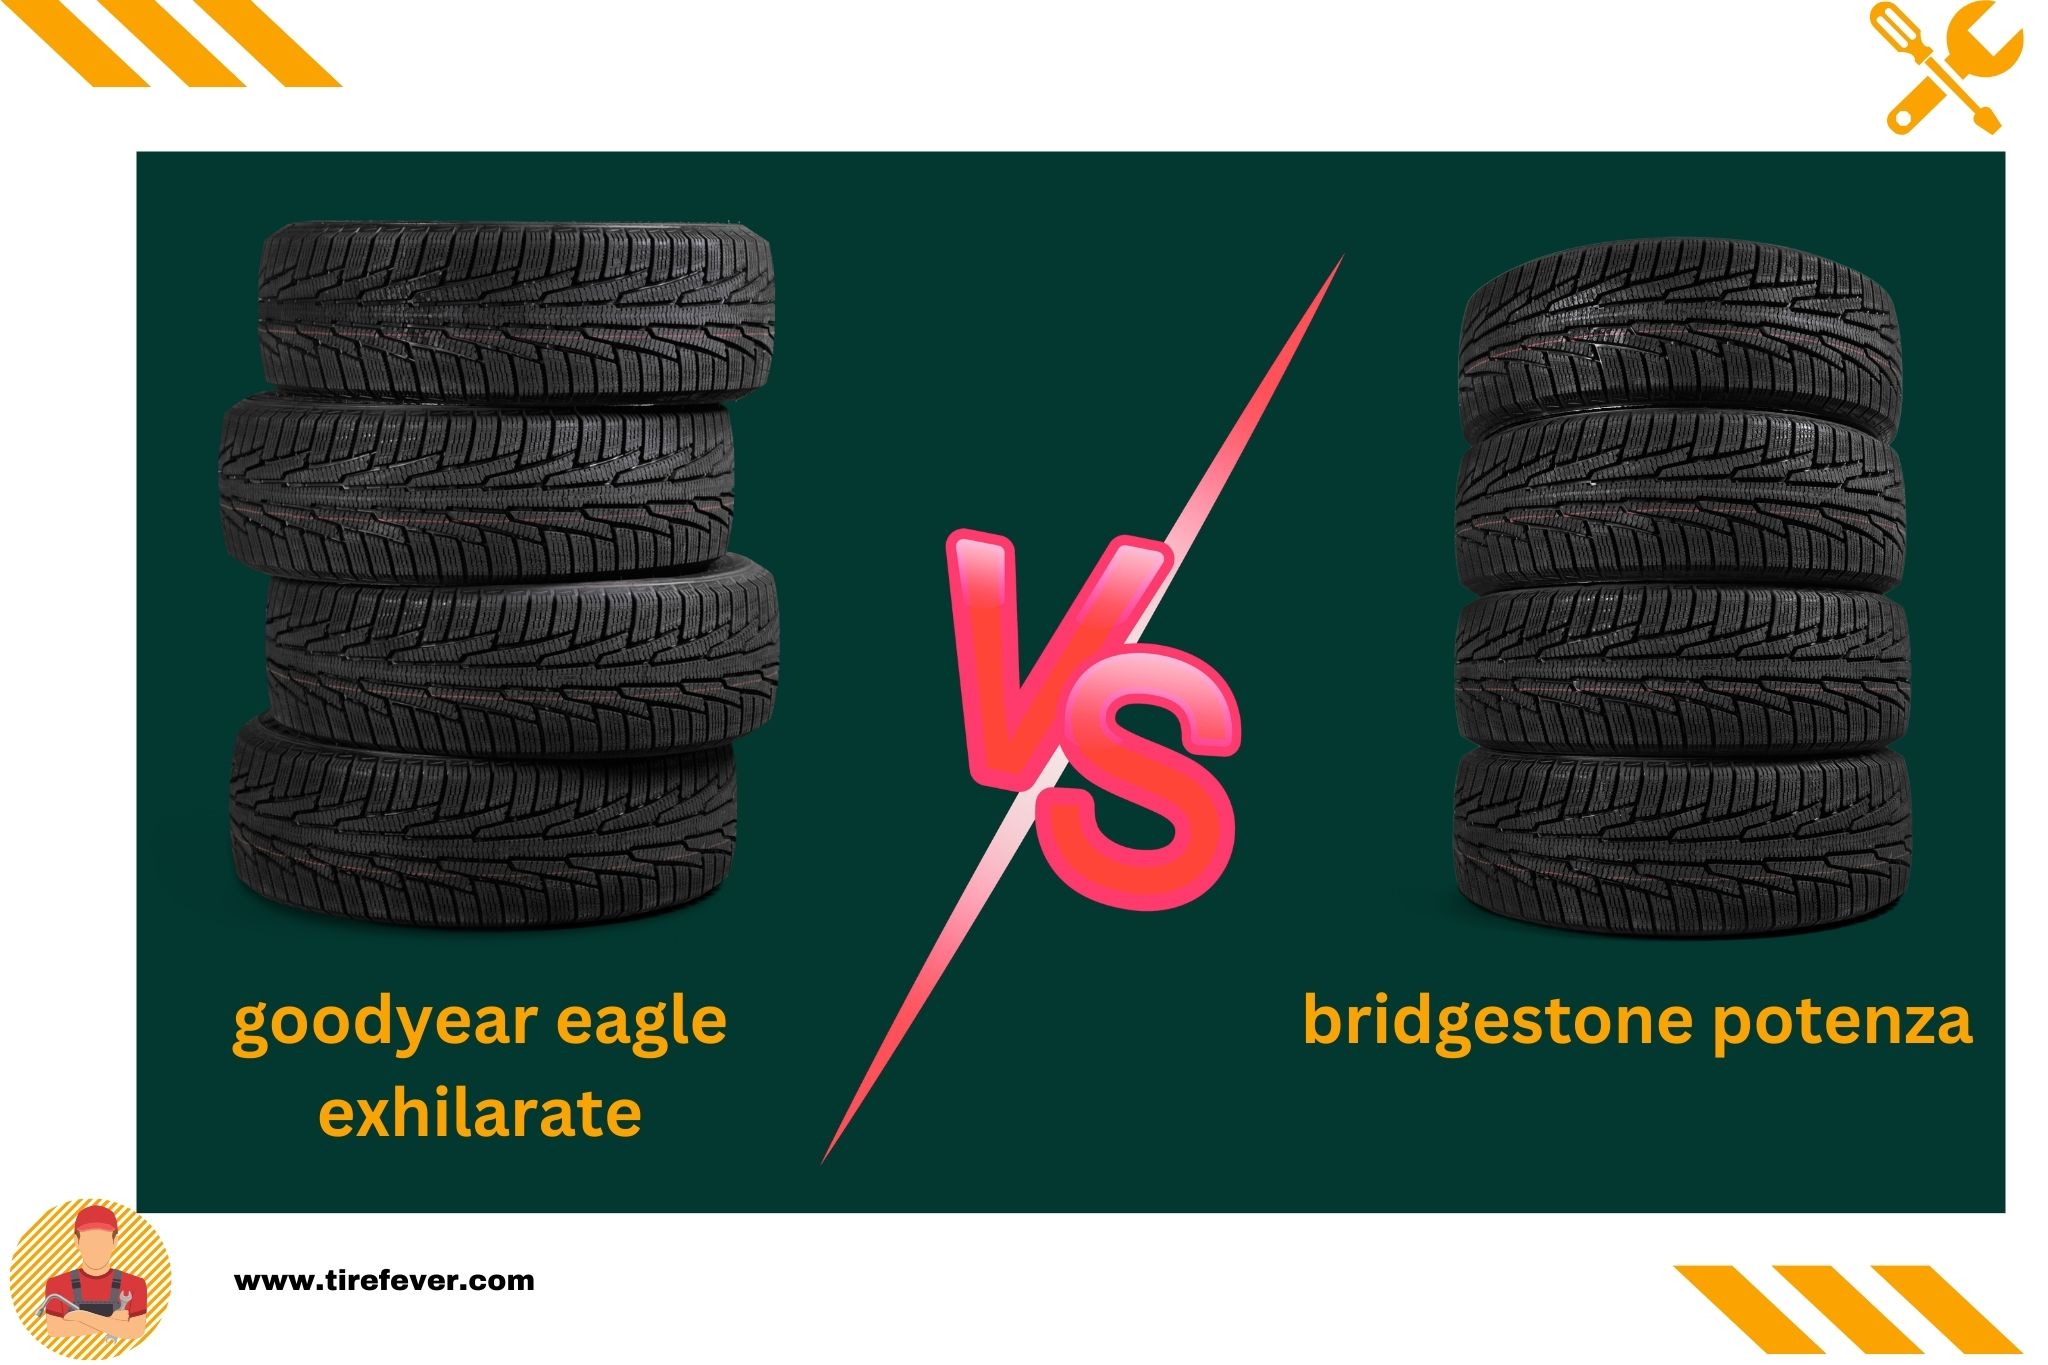 goodyear eagle exhilarate vs bridgestone potenza